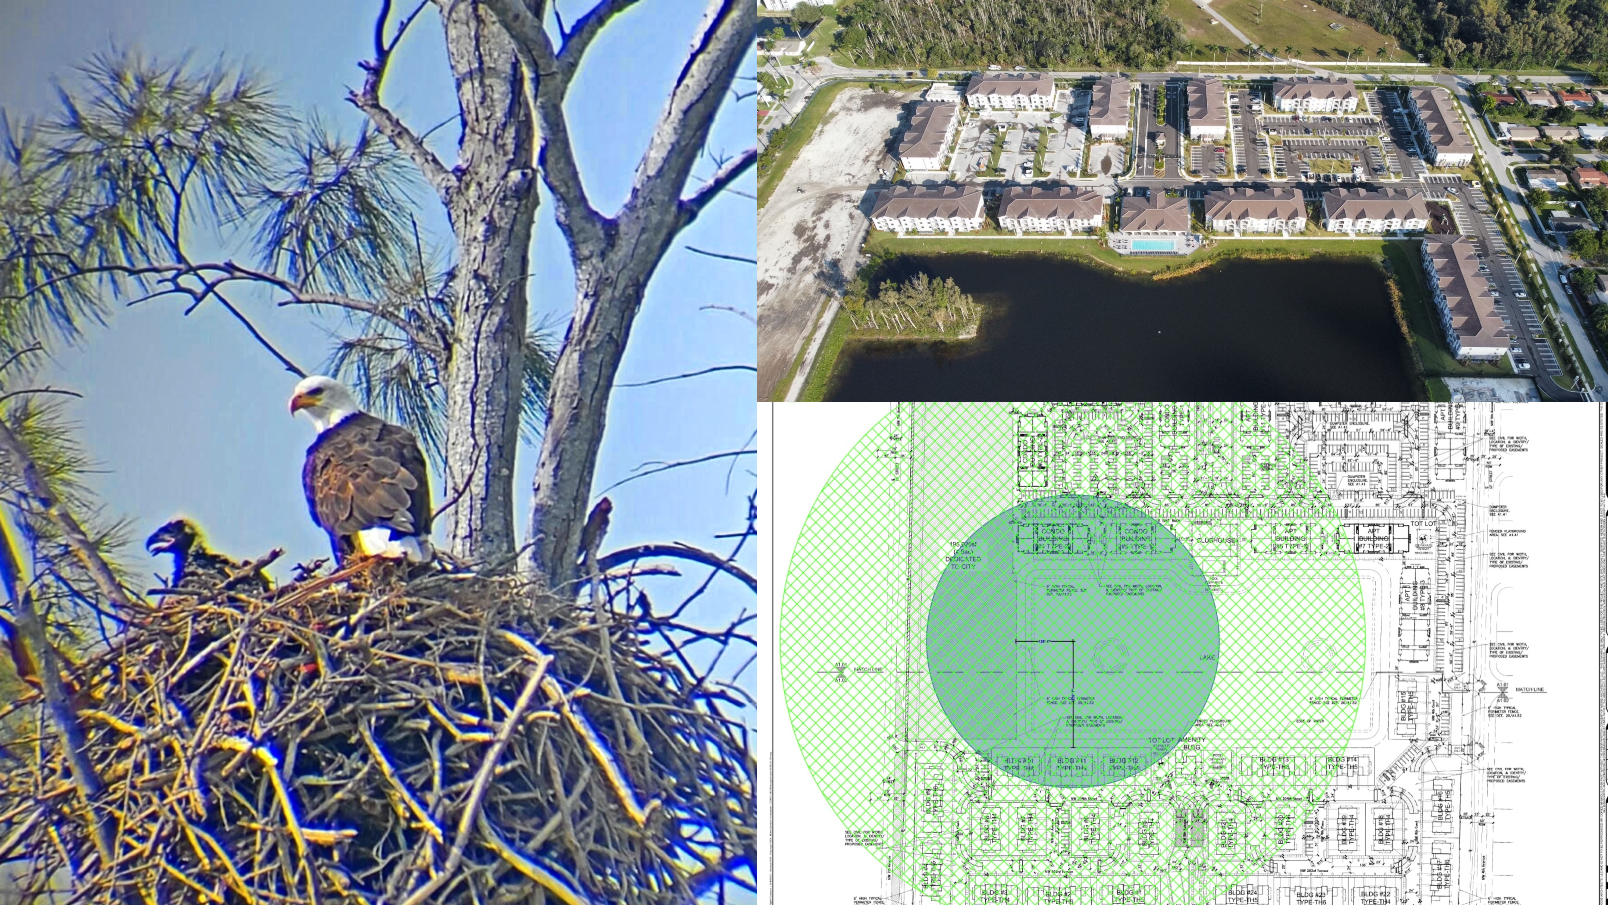 eagle with eaglet in nest alongside Vista Lago and eagle permit